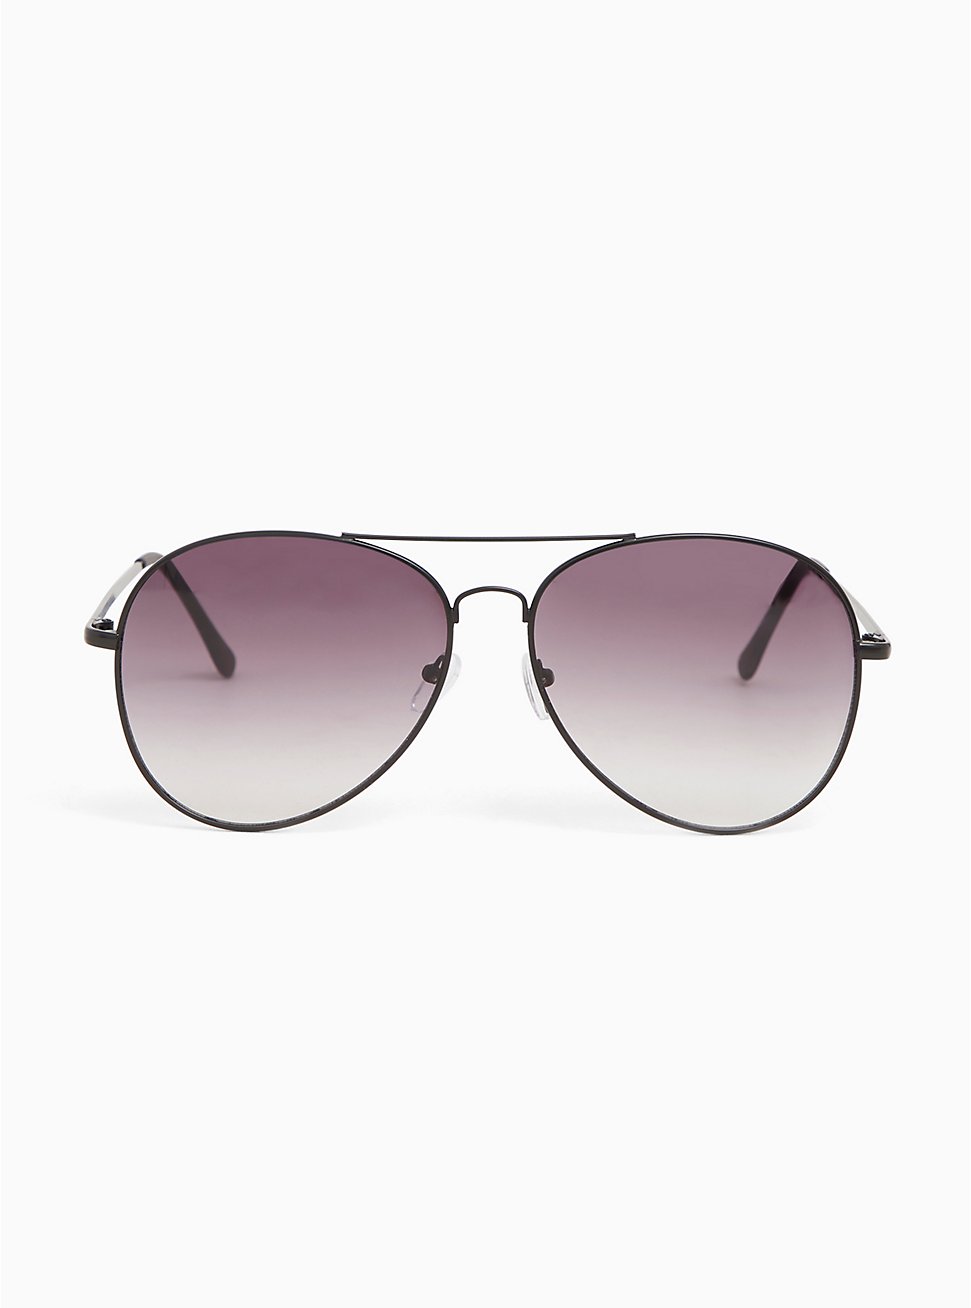 Black Tinted Aviator Sunglasses, , hi-res